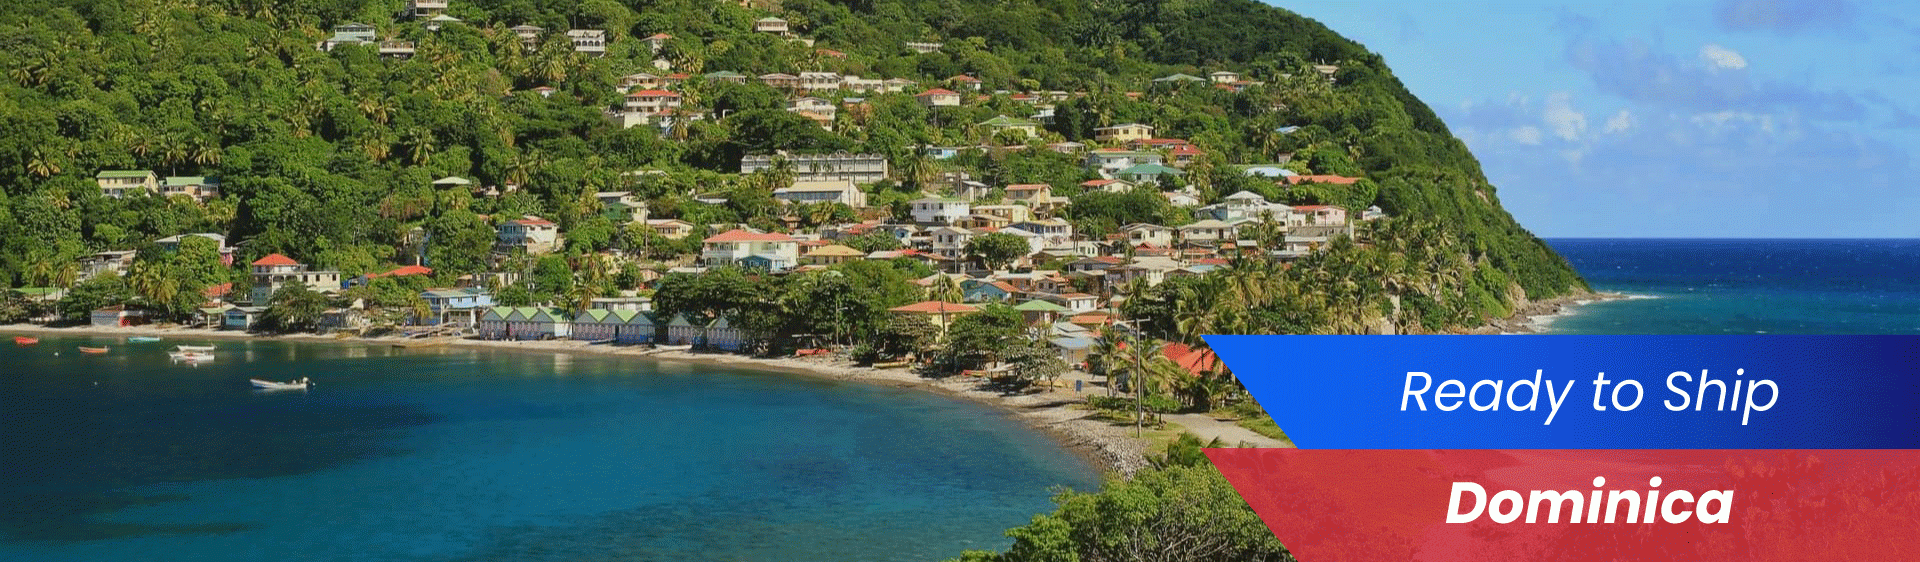 Dominica Banner